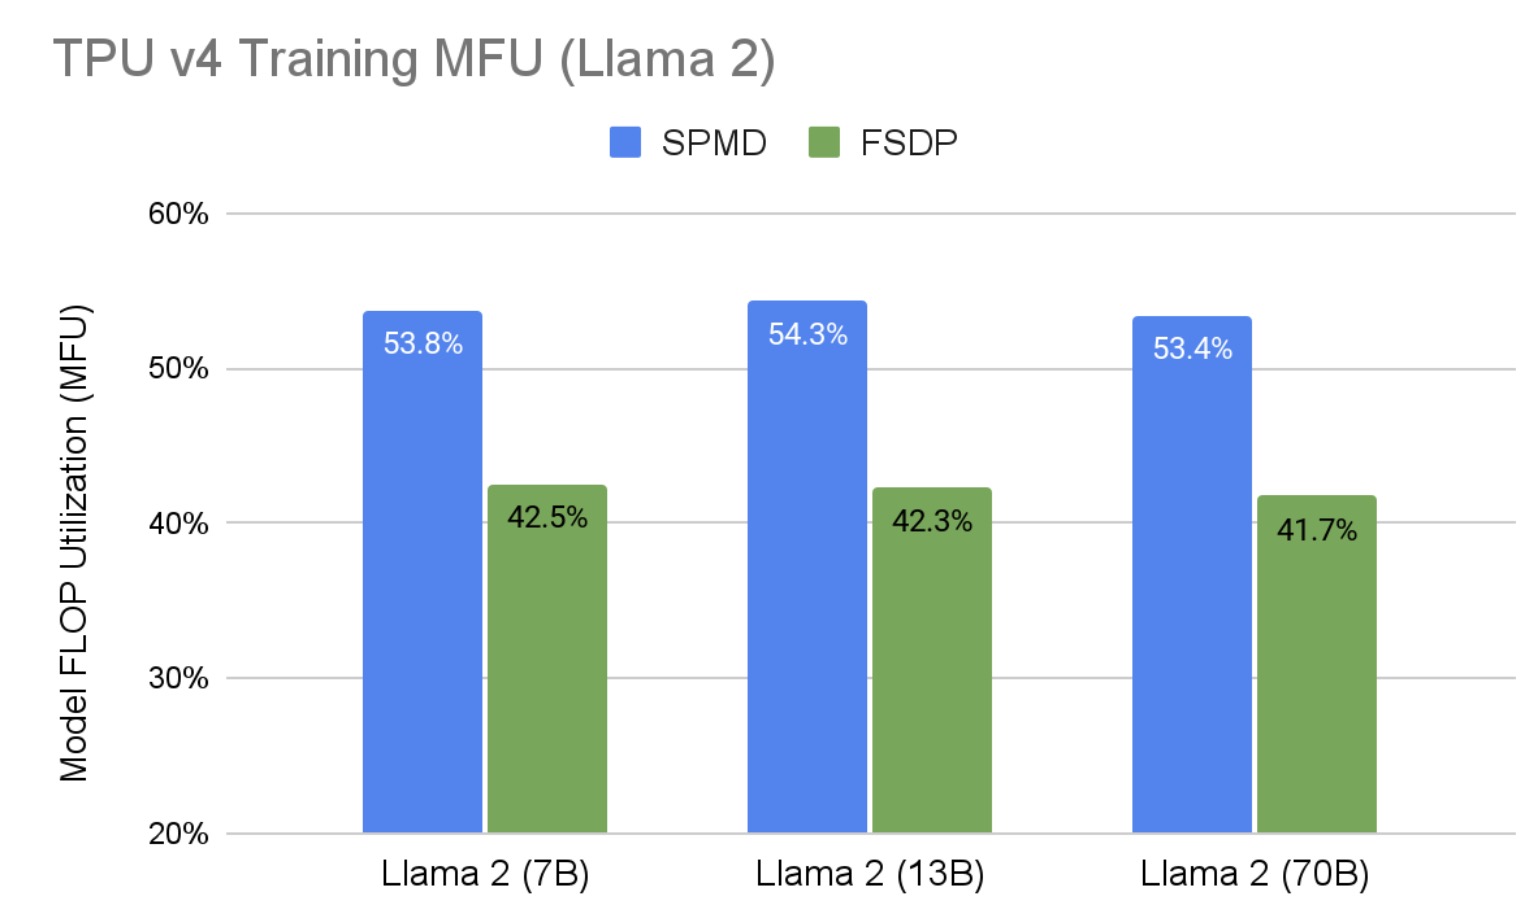 Figure 1. Llama 2 Training MFU on TPU v4 Hardware